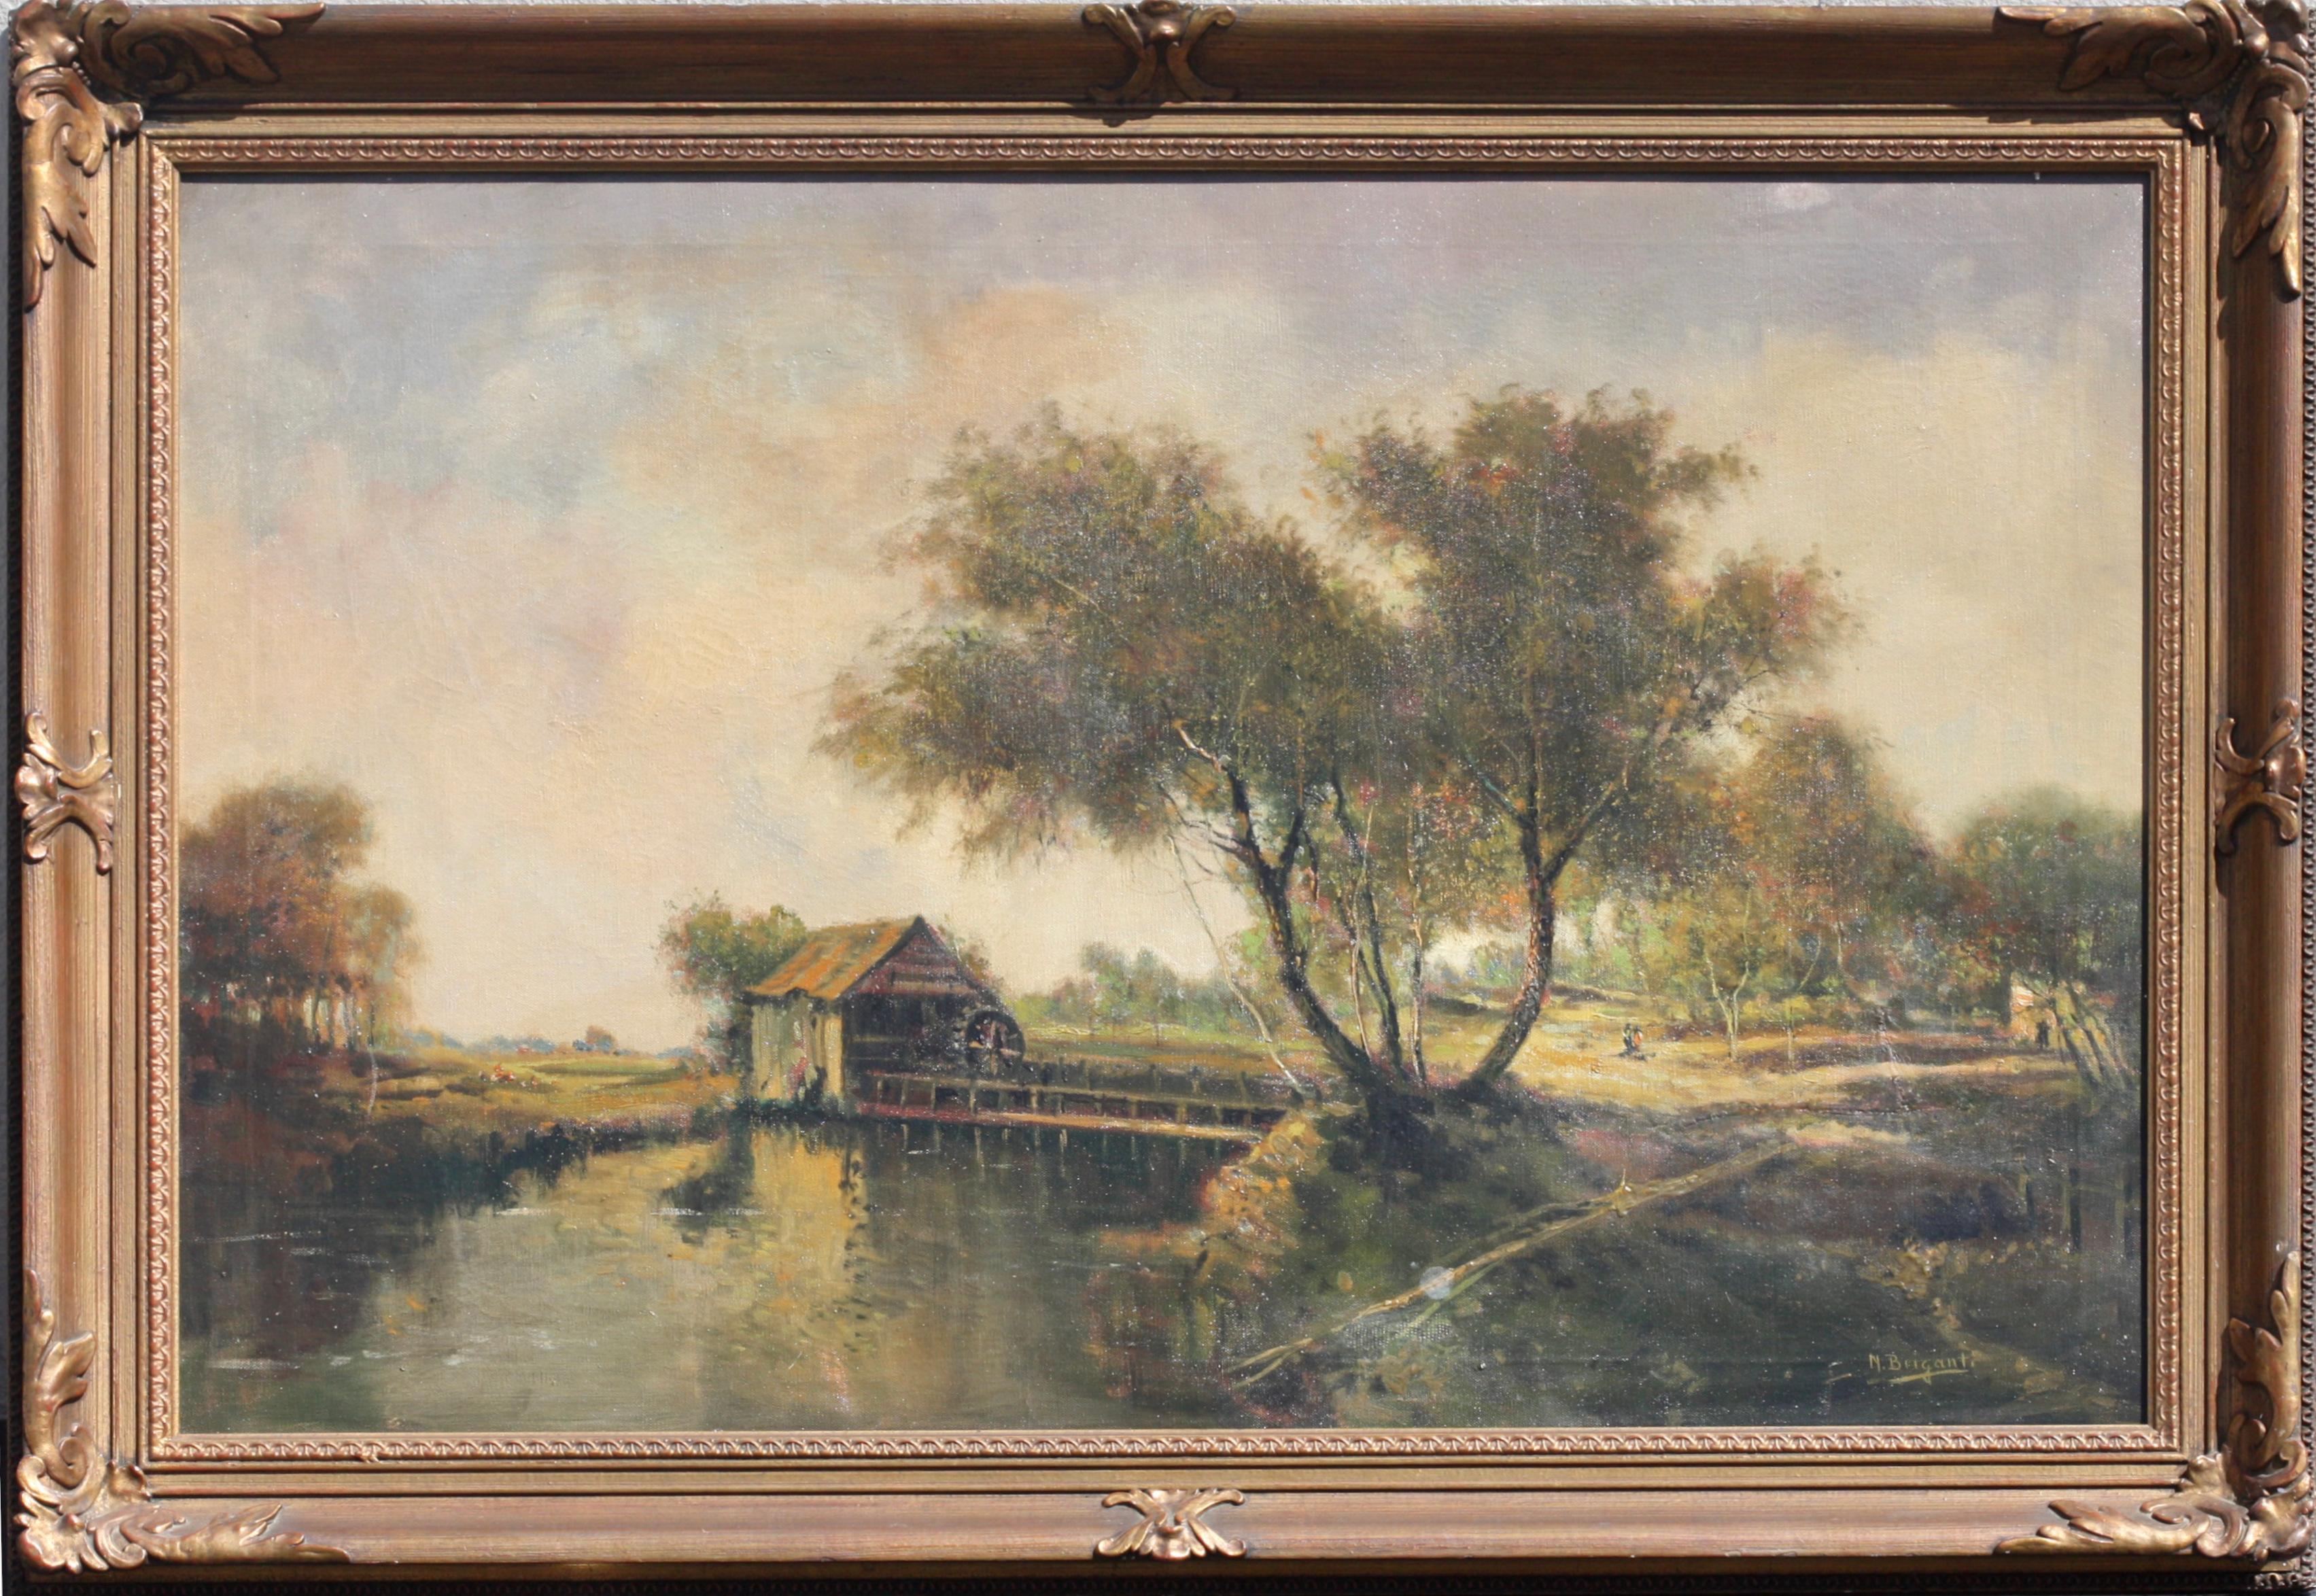 Nicholas Briganti (1861-1944)
Oil on canvas
